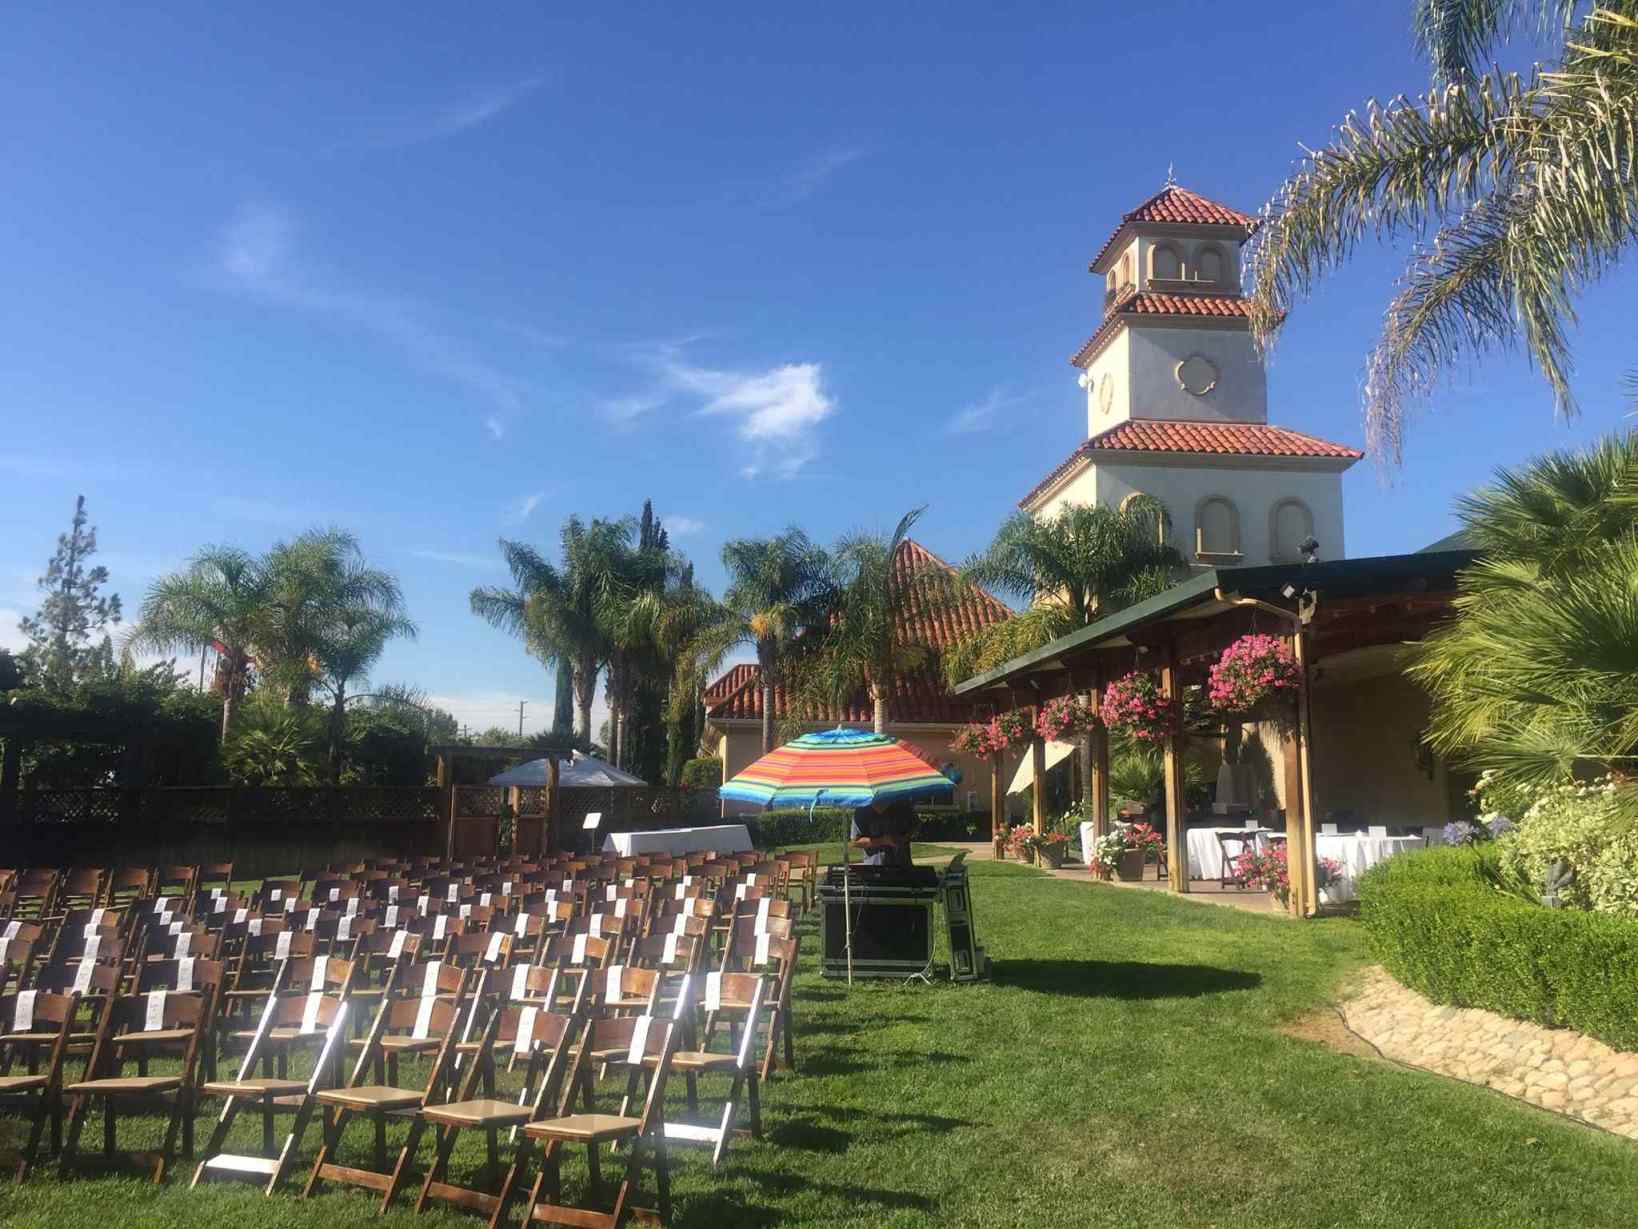 South Coast Winery Resort and Spa Weddings Inland Empire Wedding…